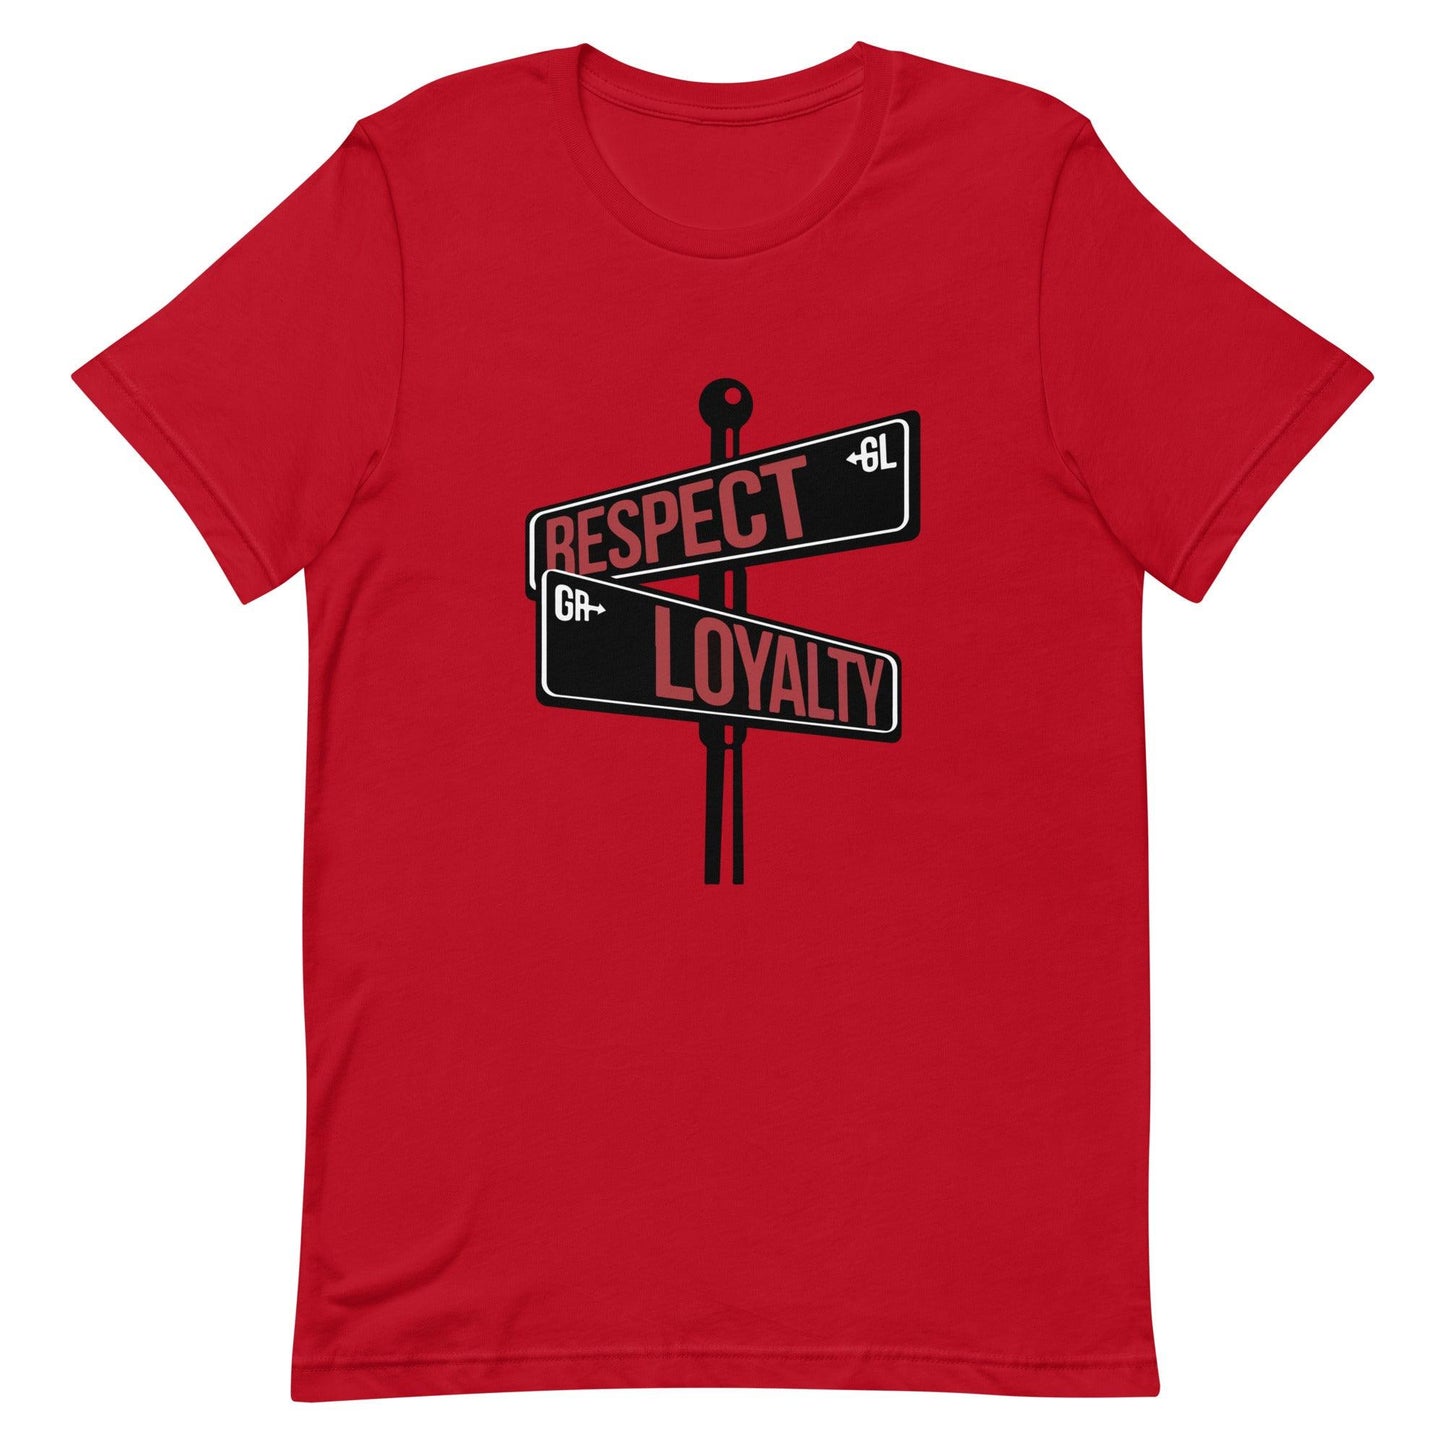 Kesean Carter "Signature" t-shirt - Fan Arch